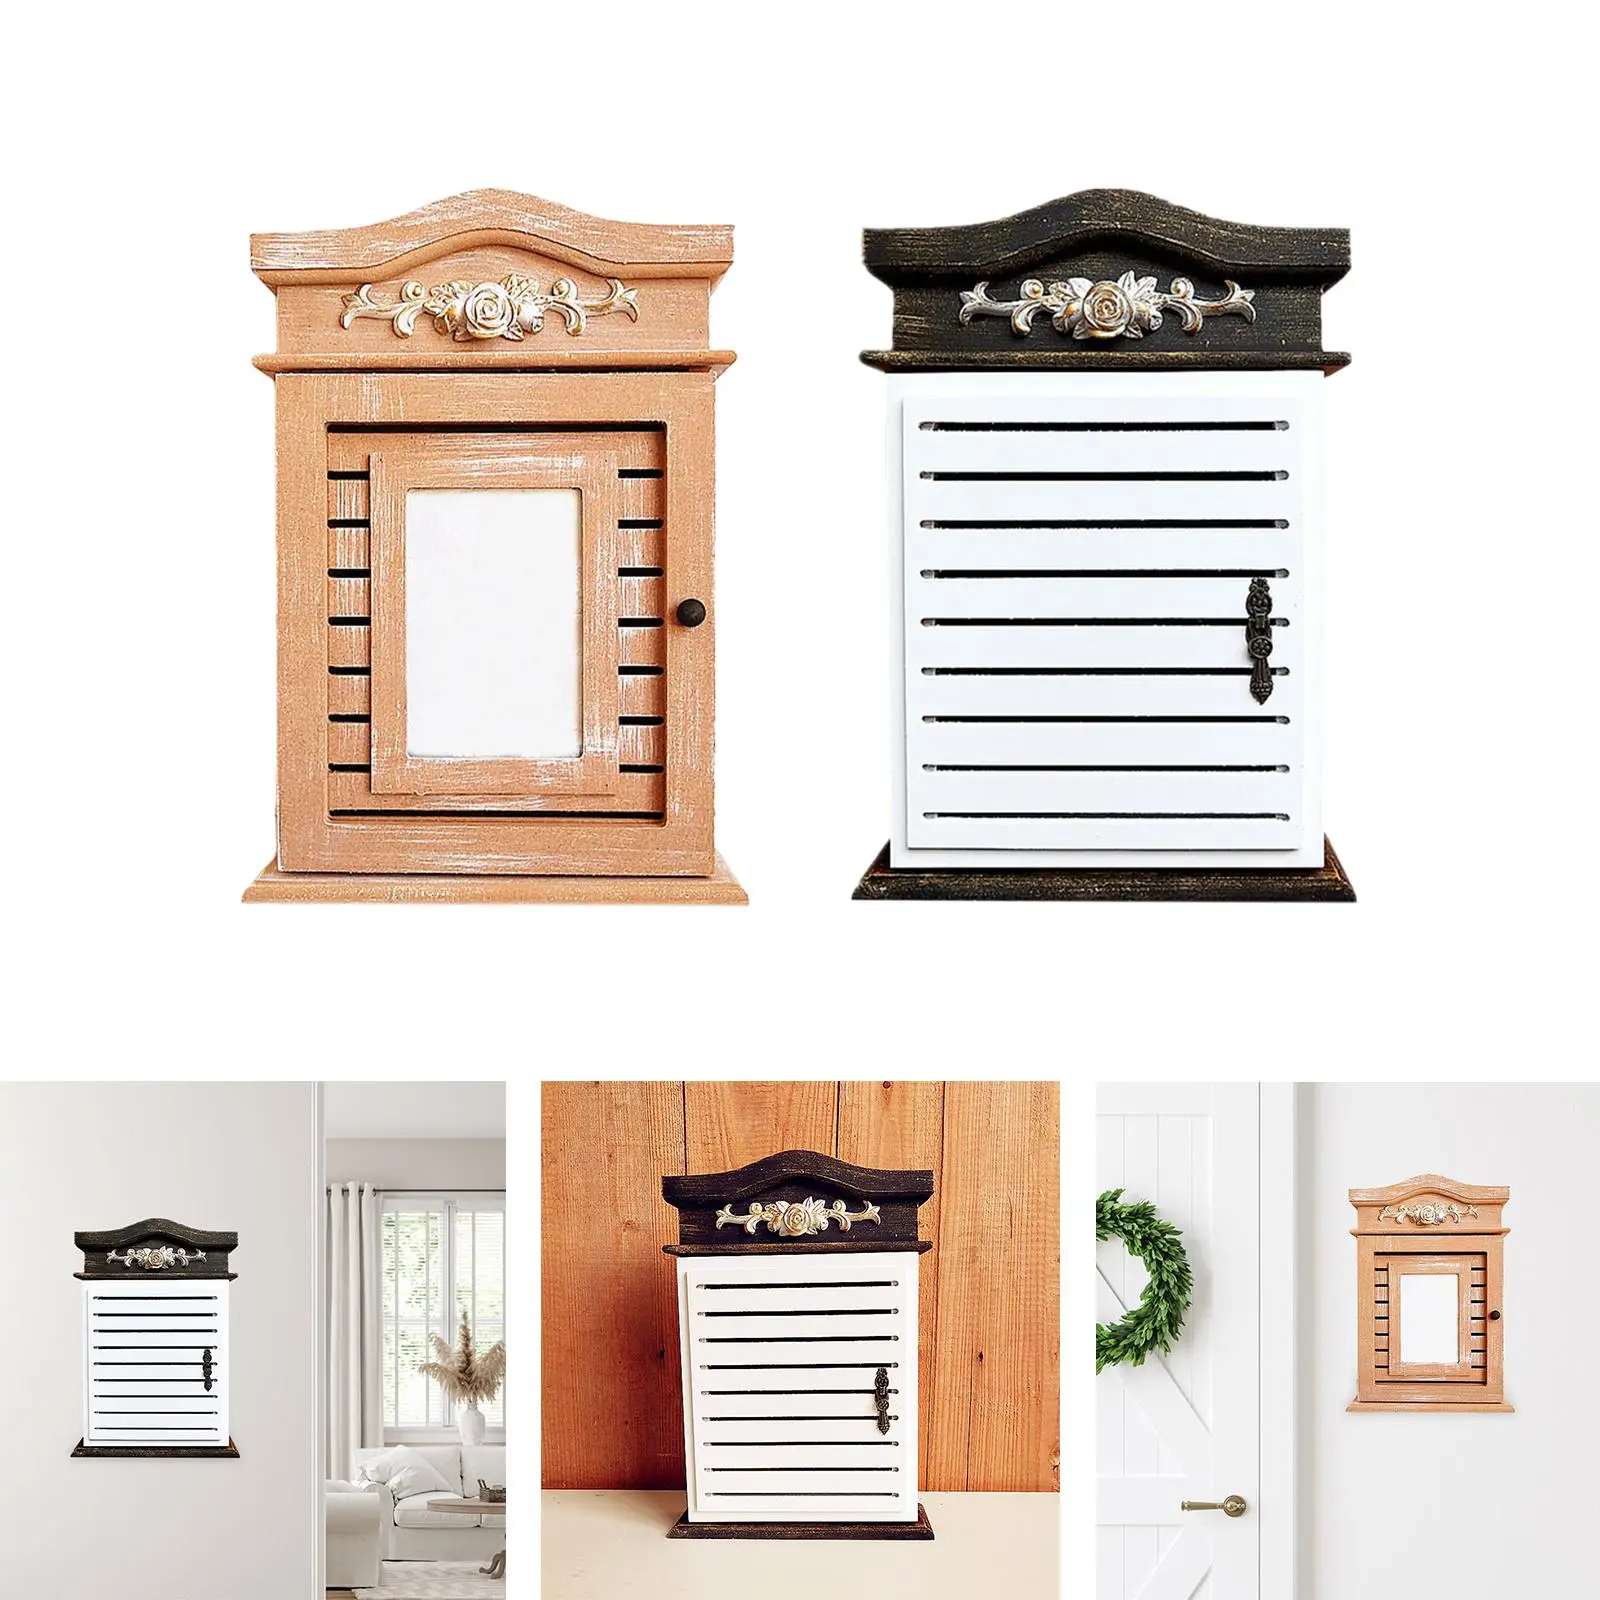 Key Storage Box Holder Vintage -Mounted Multi-Use Organizer Large Capacity Case for Home, Housewarming Gift Porch Desktop Decor